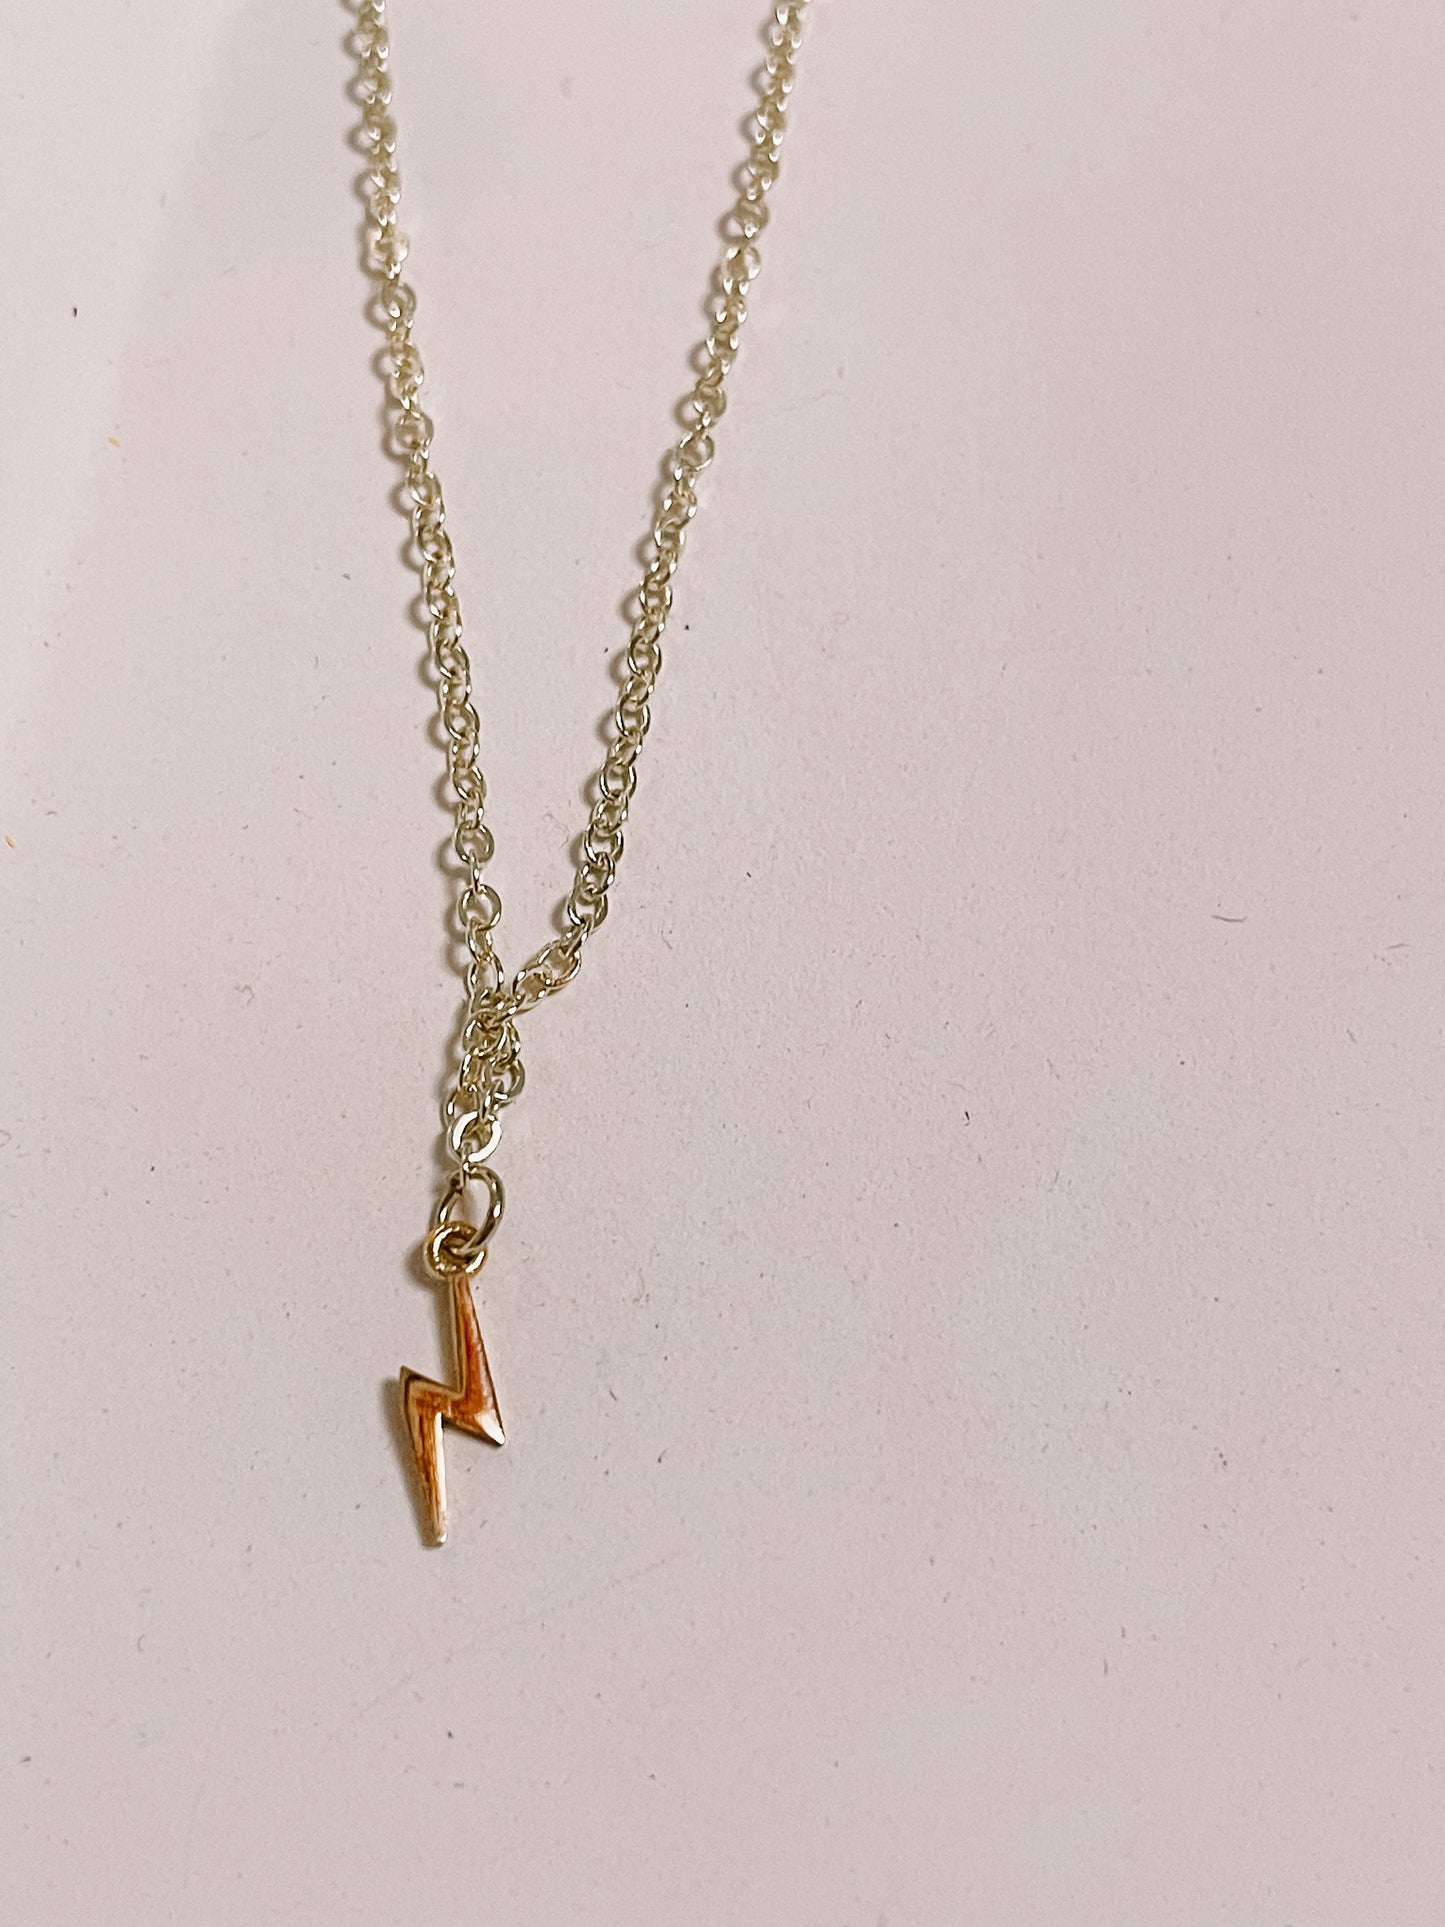 Lightning bolt charm necklace